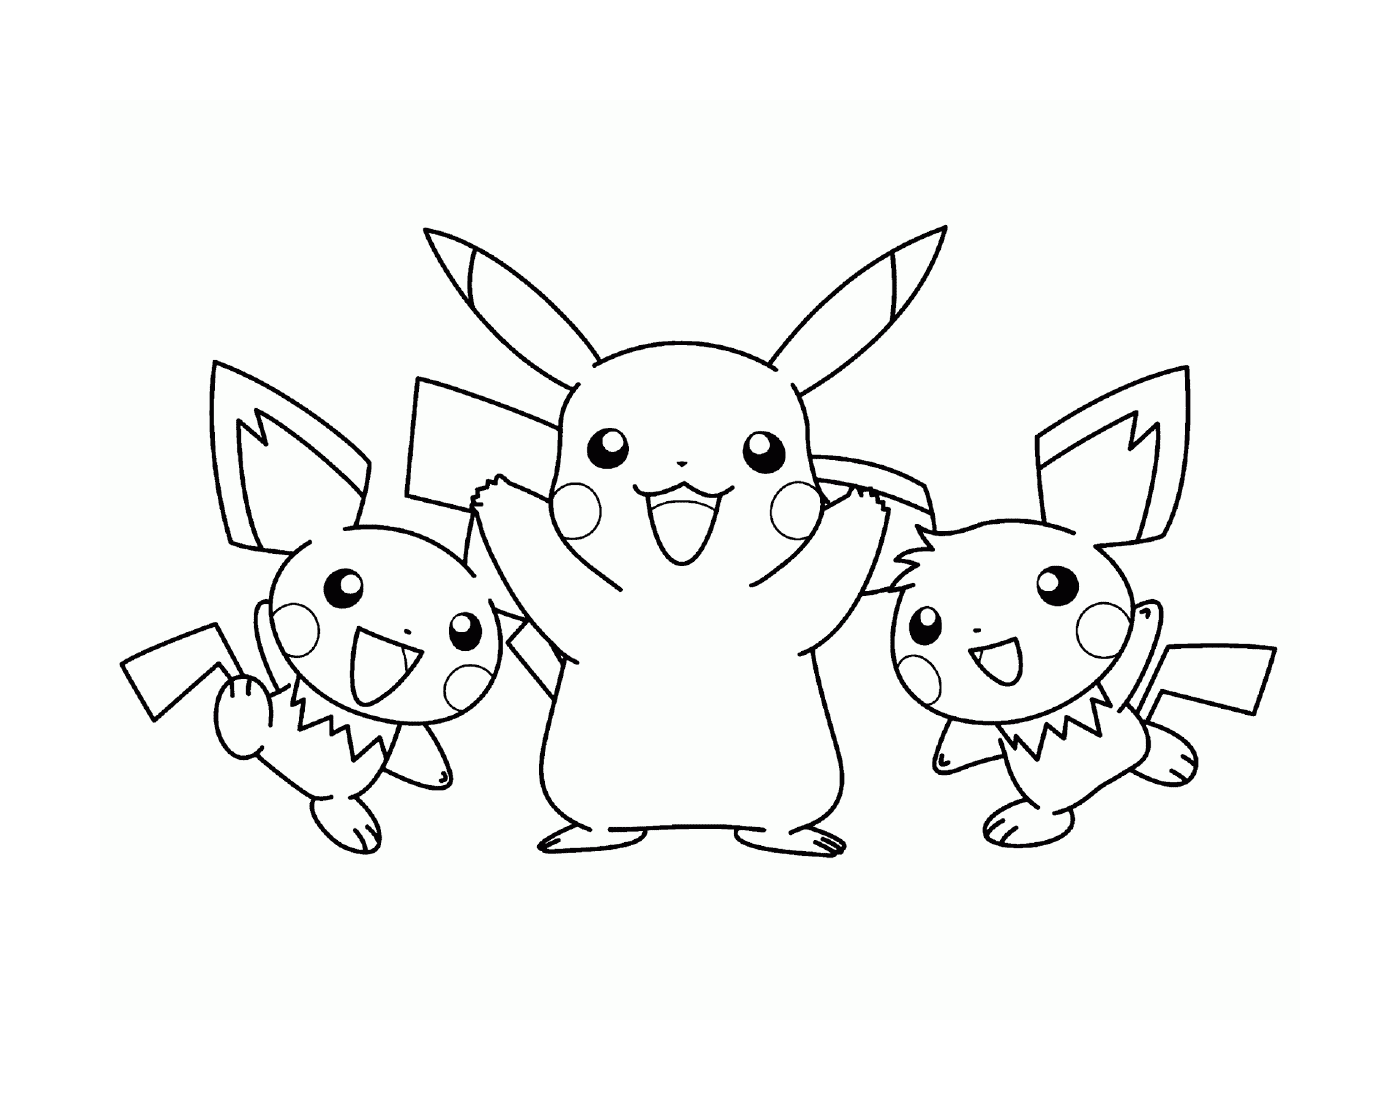  Tre Pikachus insieme 